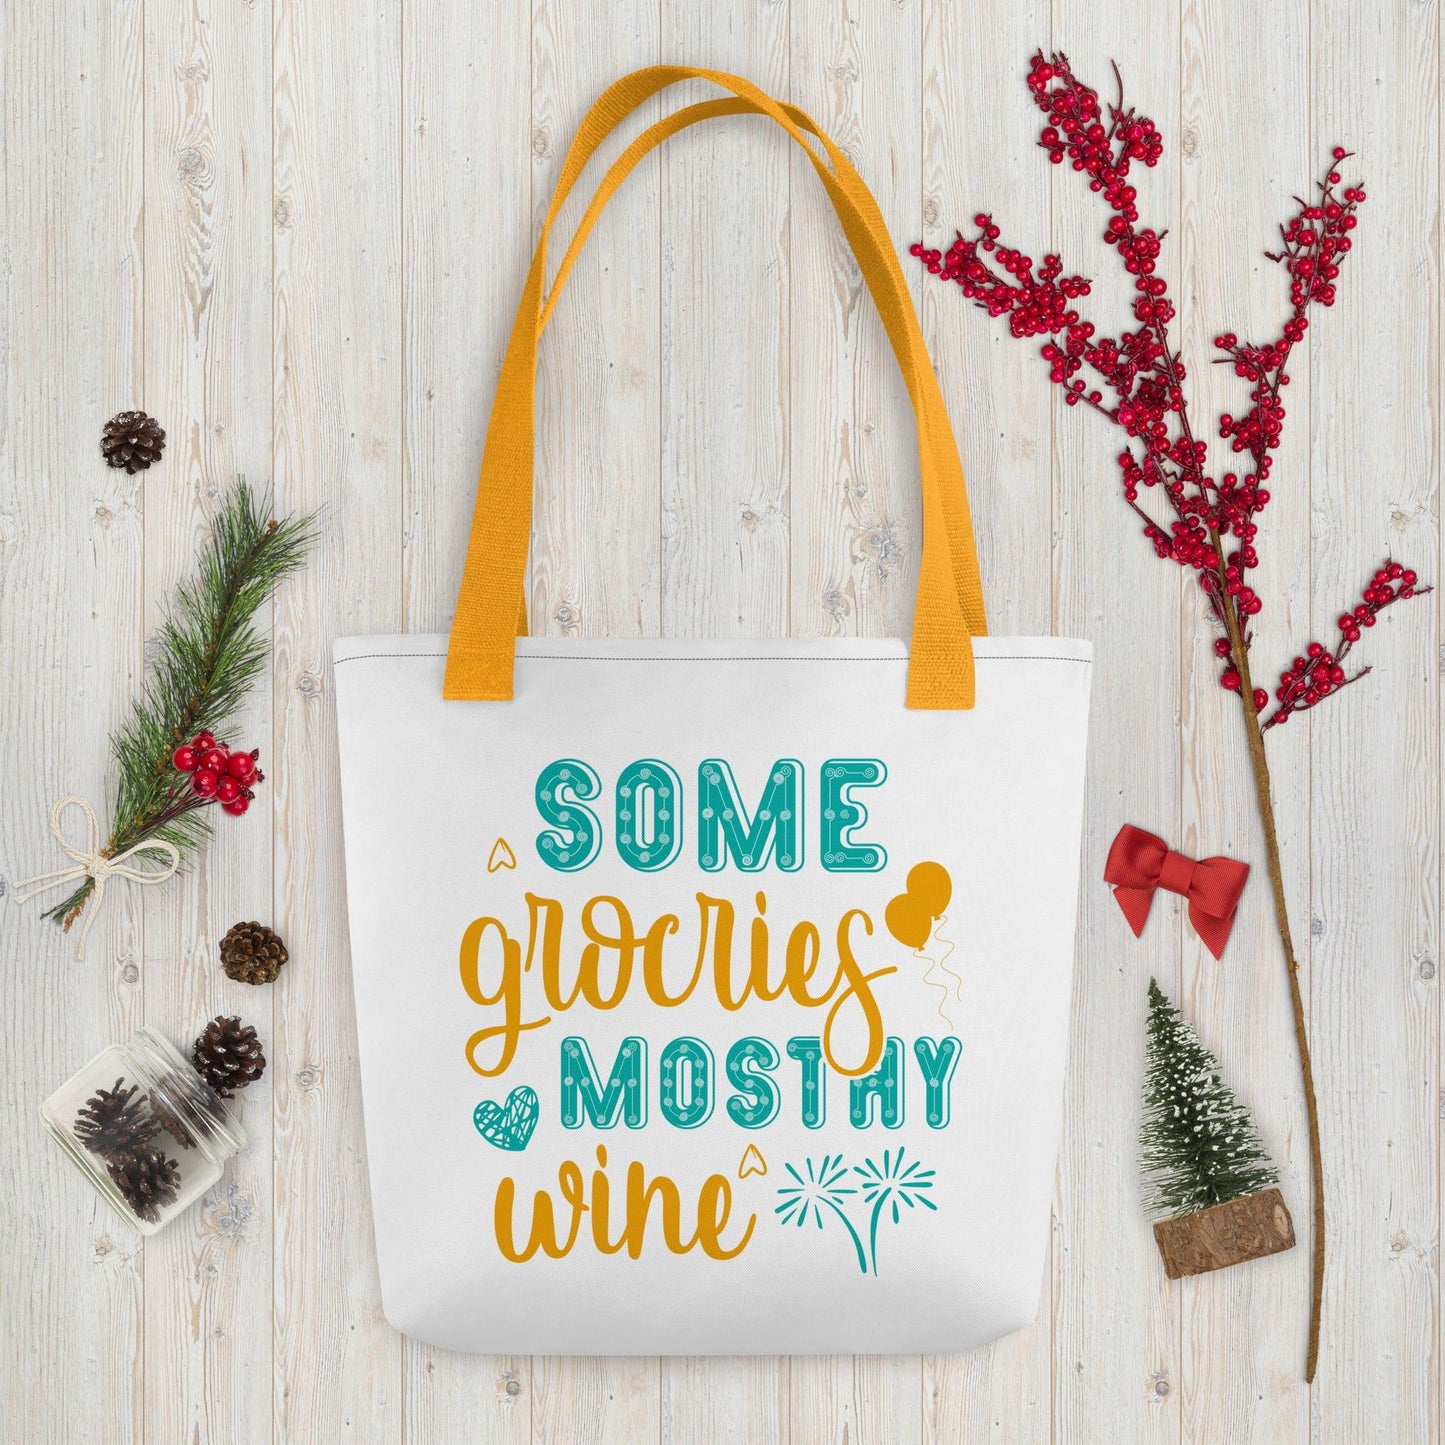 Groceries Mostly Wine Tote bag - L & M Kee, LLC